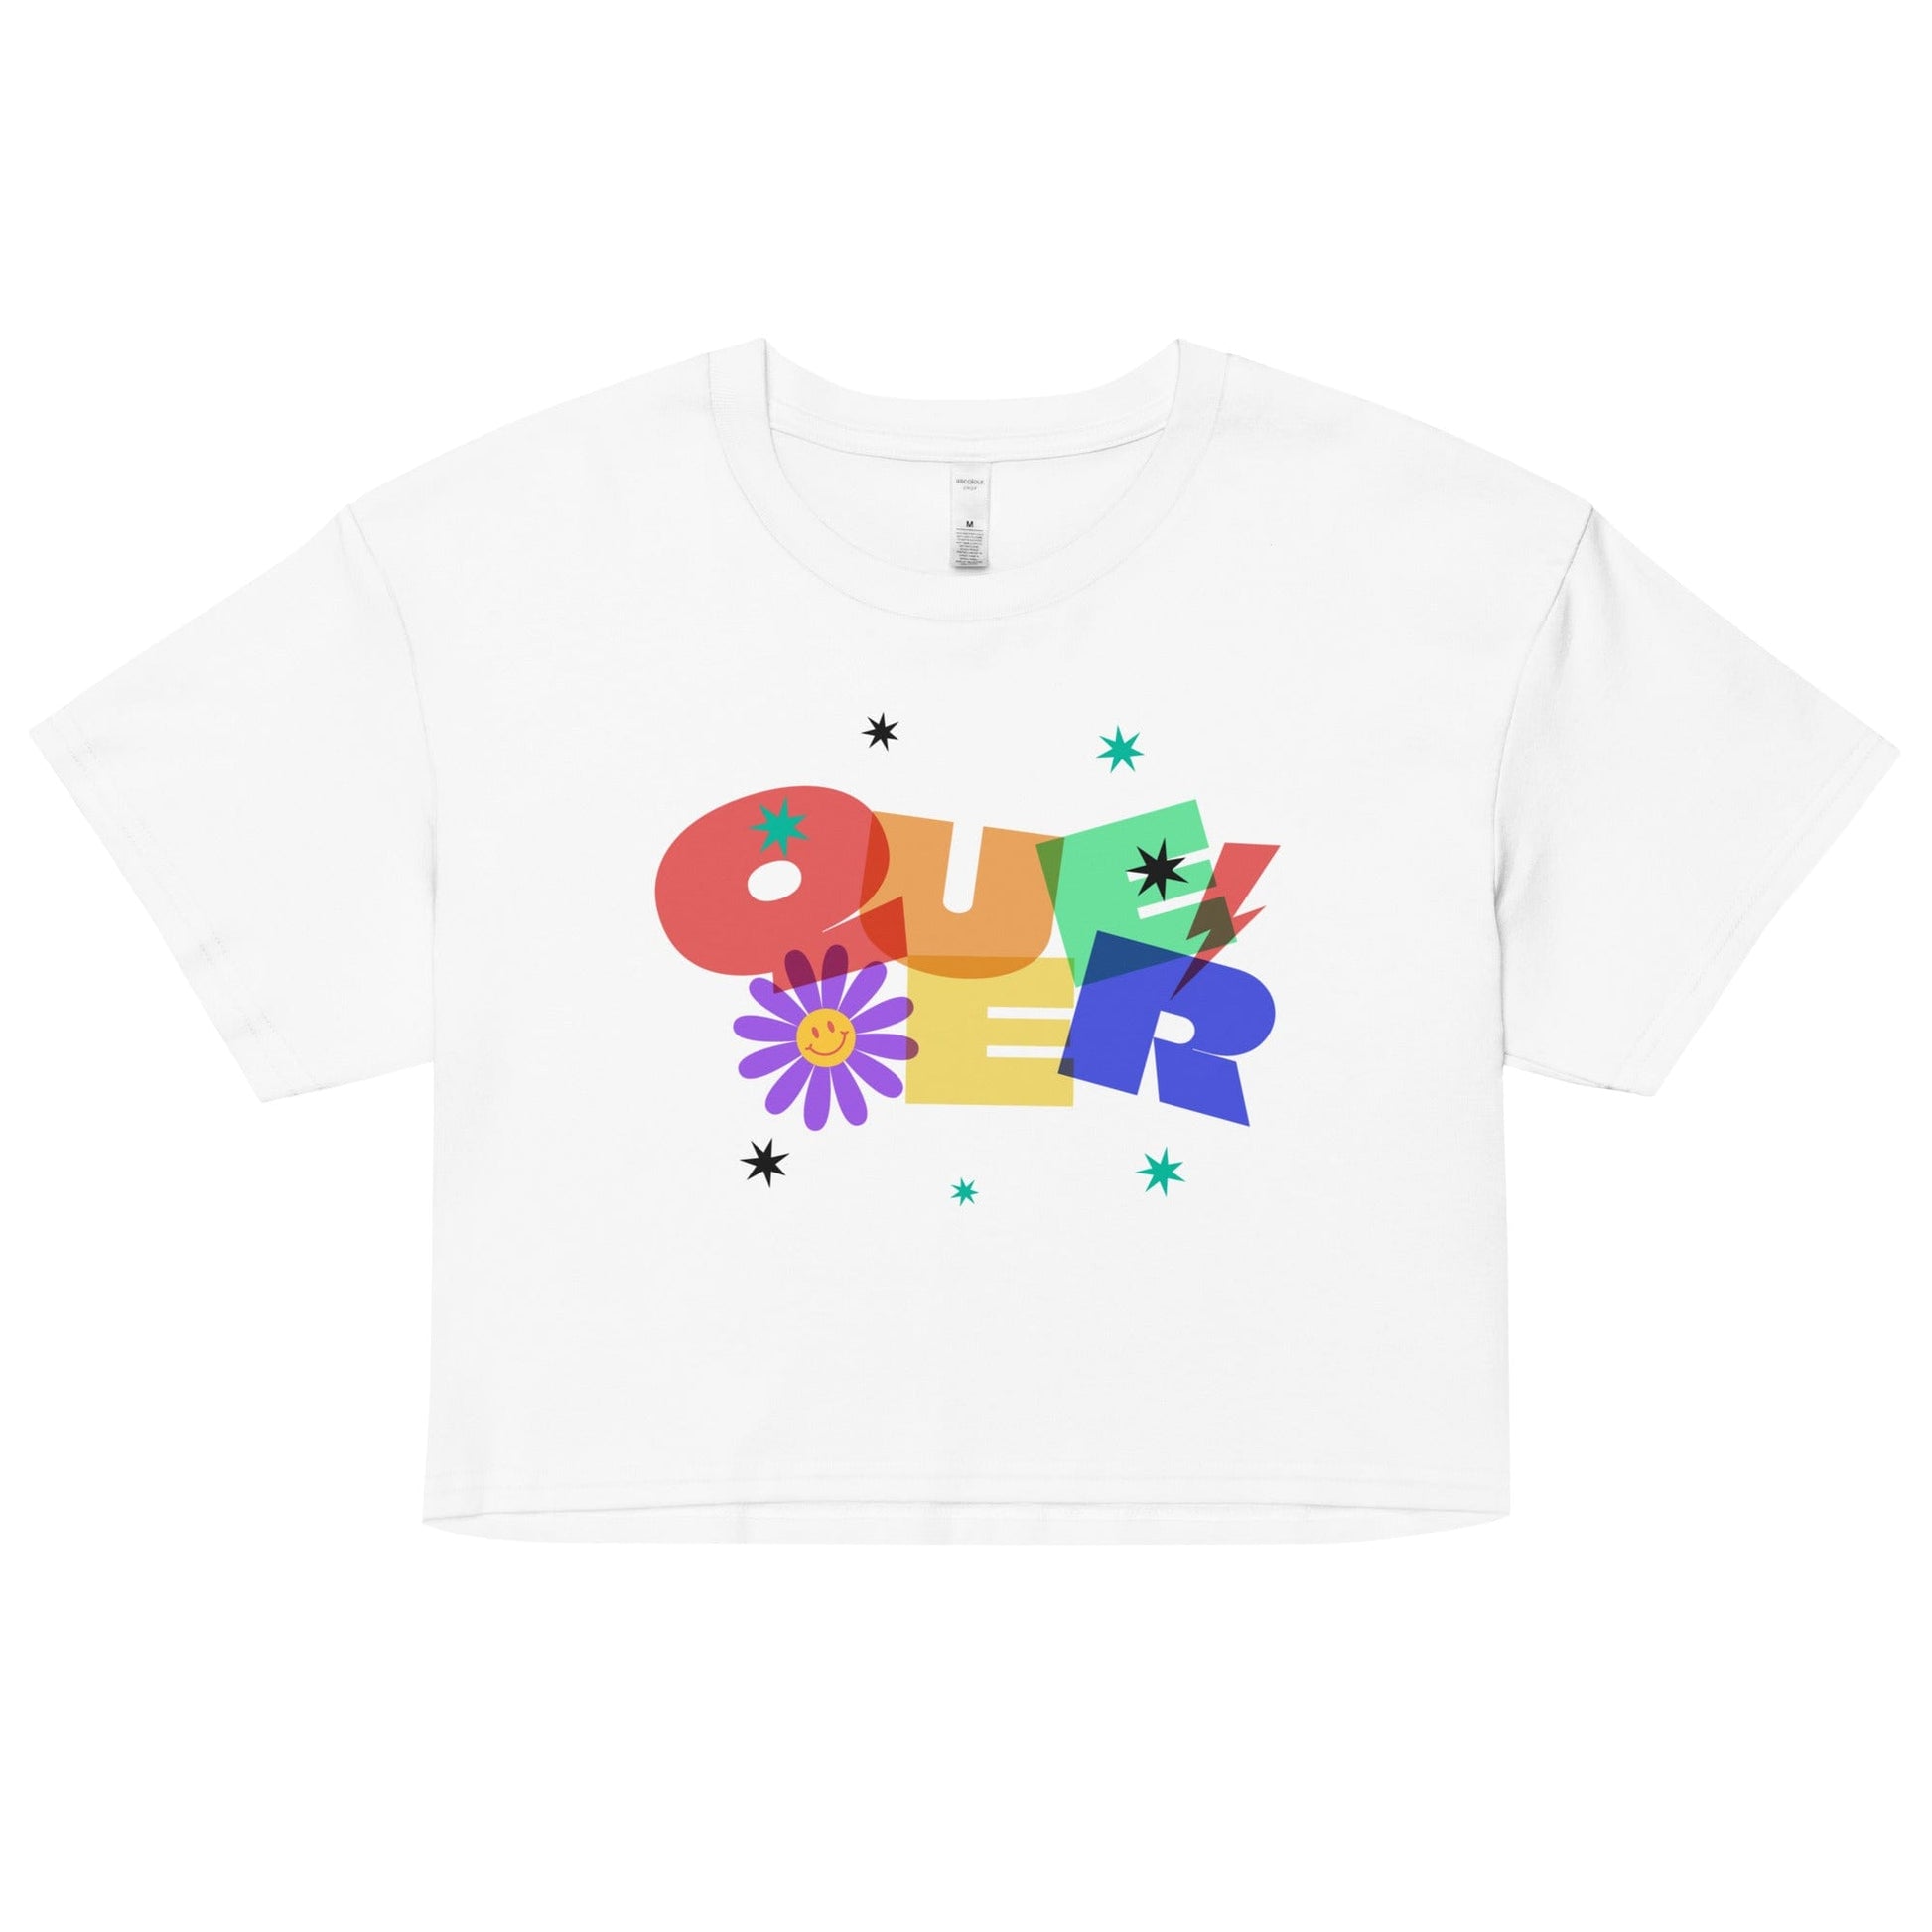 queer-crop-top-white-lgbtq-apparel-at-feminist-define